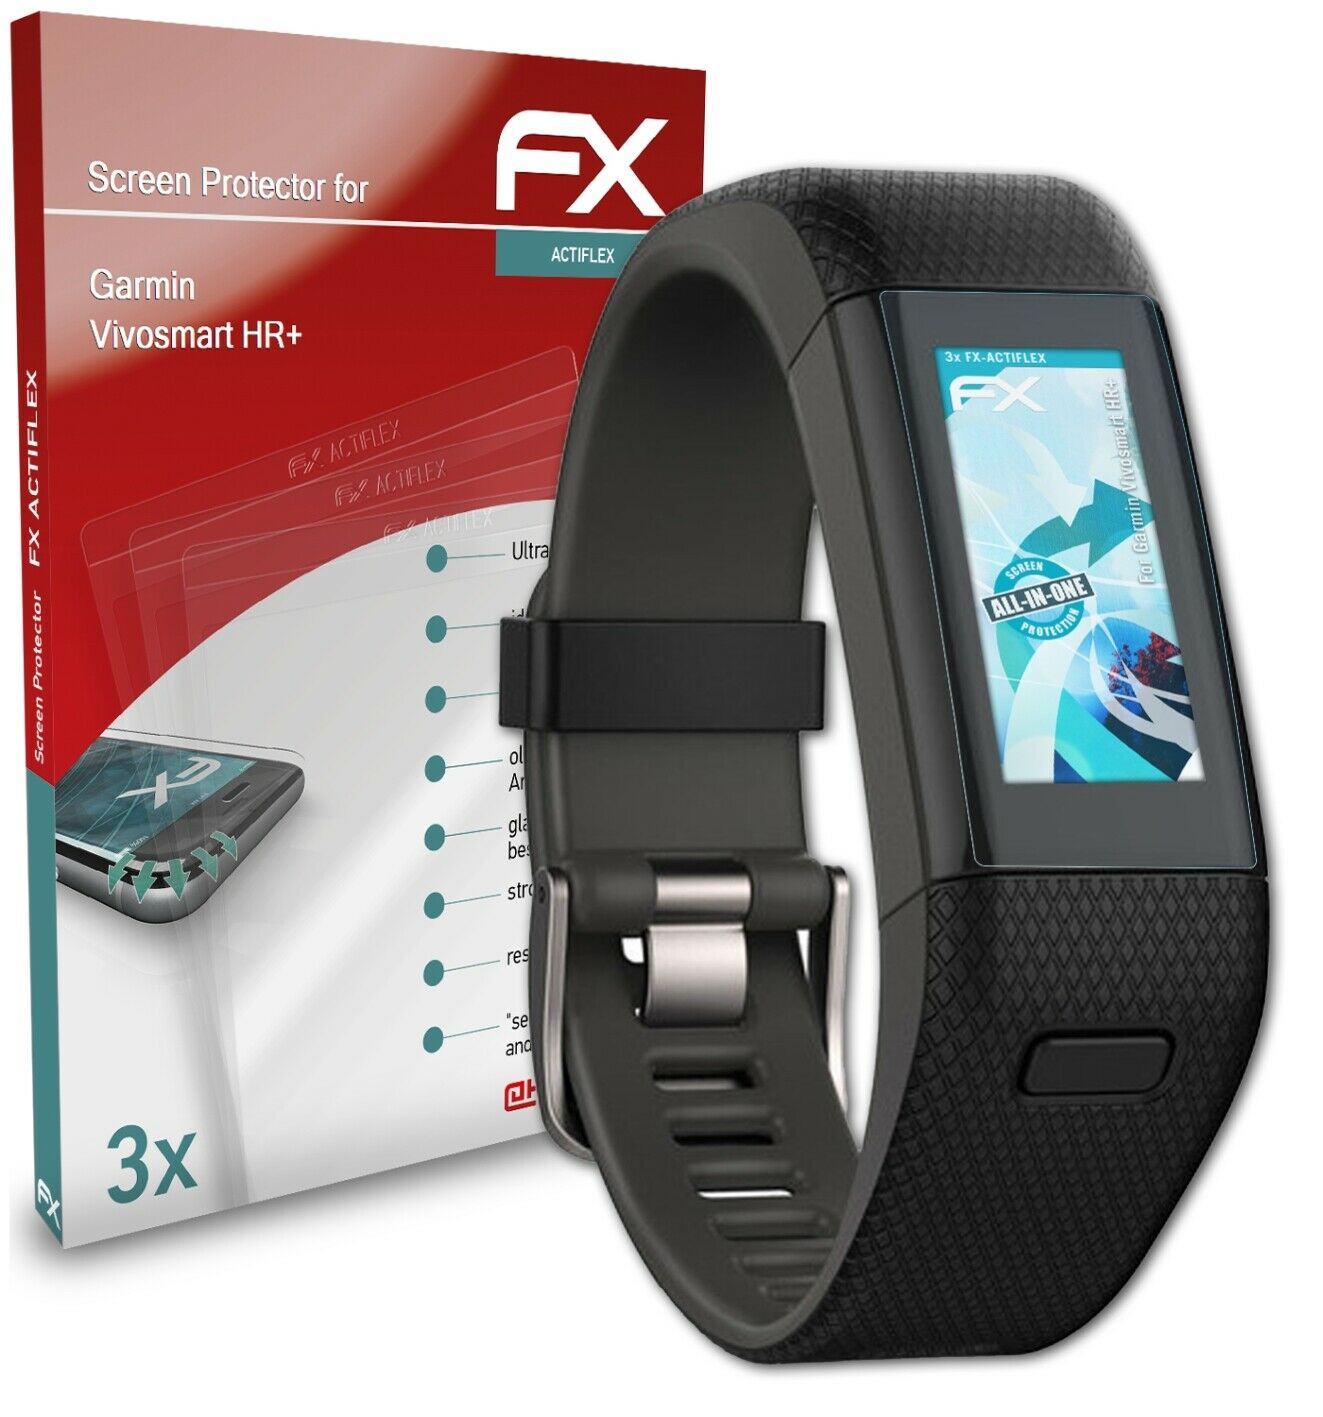 atFoliX 3x Protective Film for Garmin Vivosmart HR+ clear&flexible